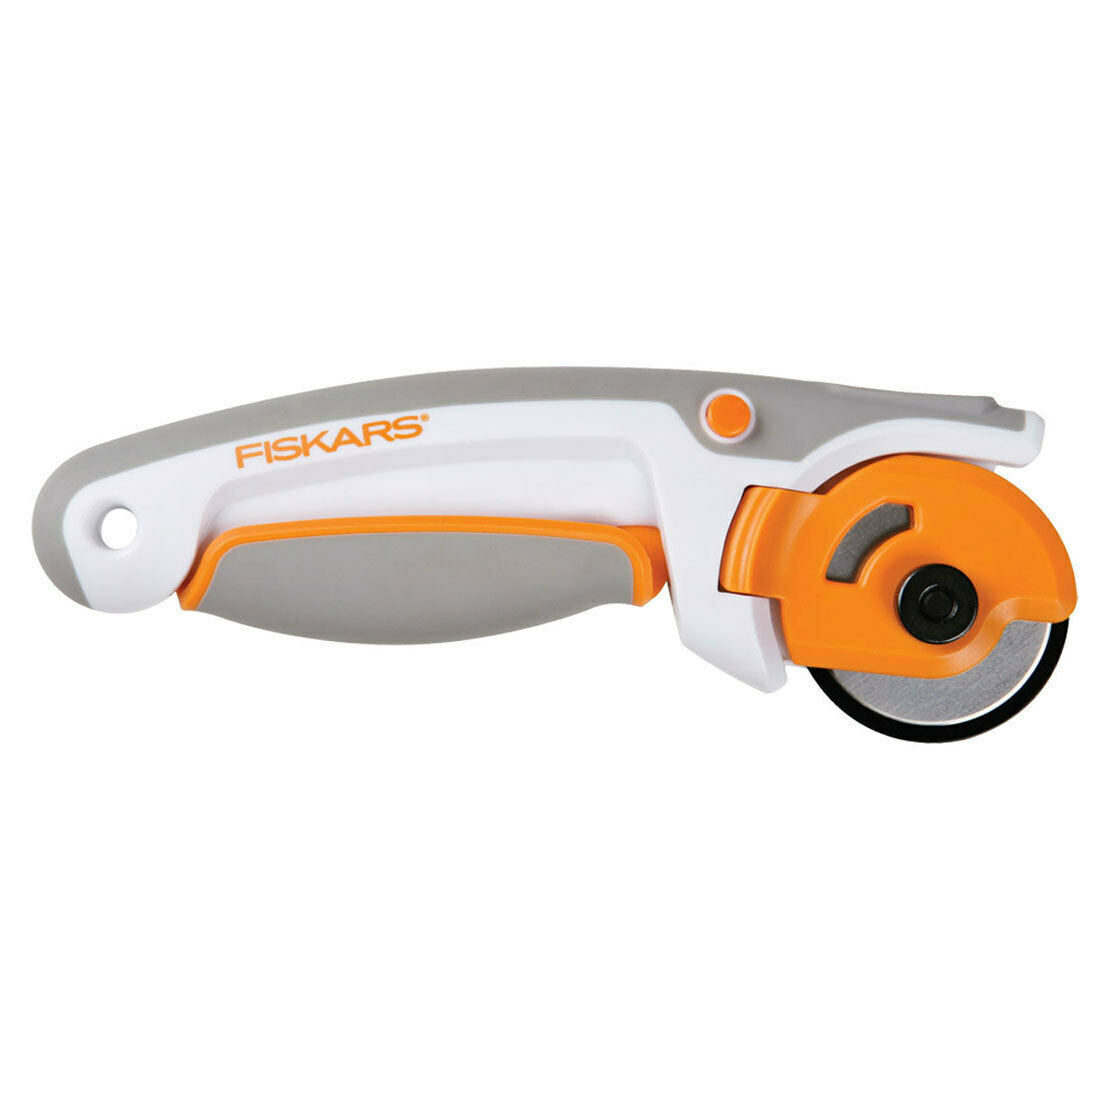 Fiskars 45mm Rotary Cutter, Titanium Blade, Ergonomic Design, Softgrip Comfort, Additional Blade, Magnetic blade system